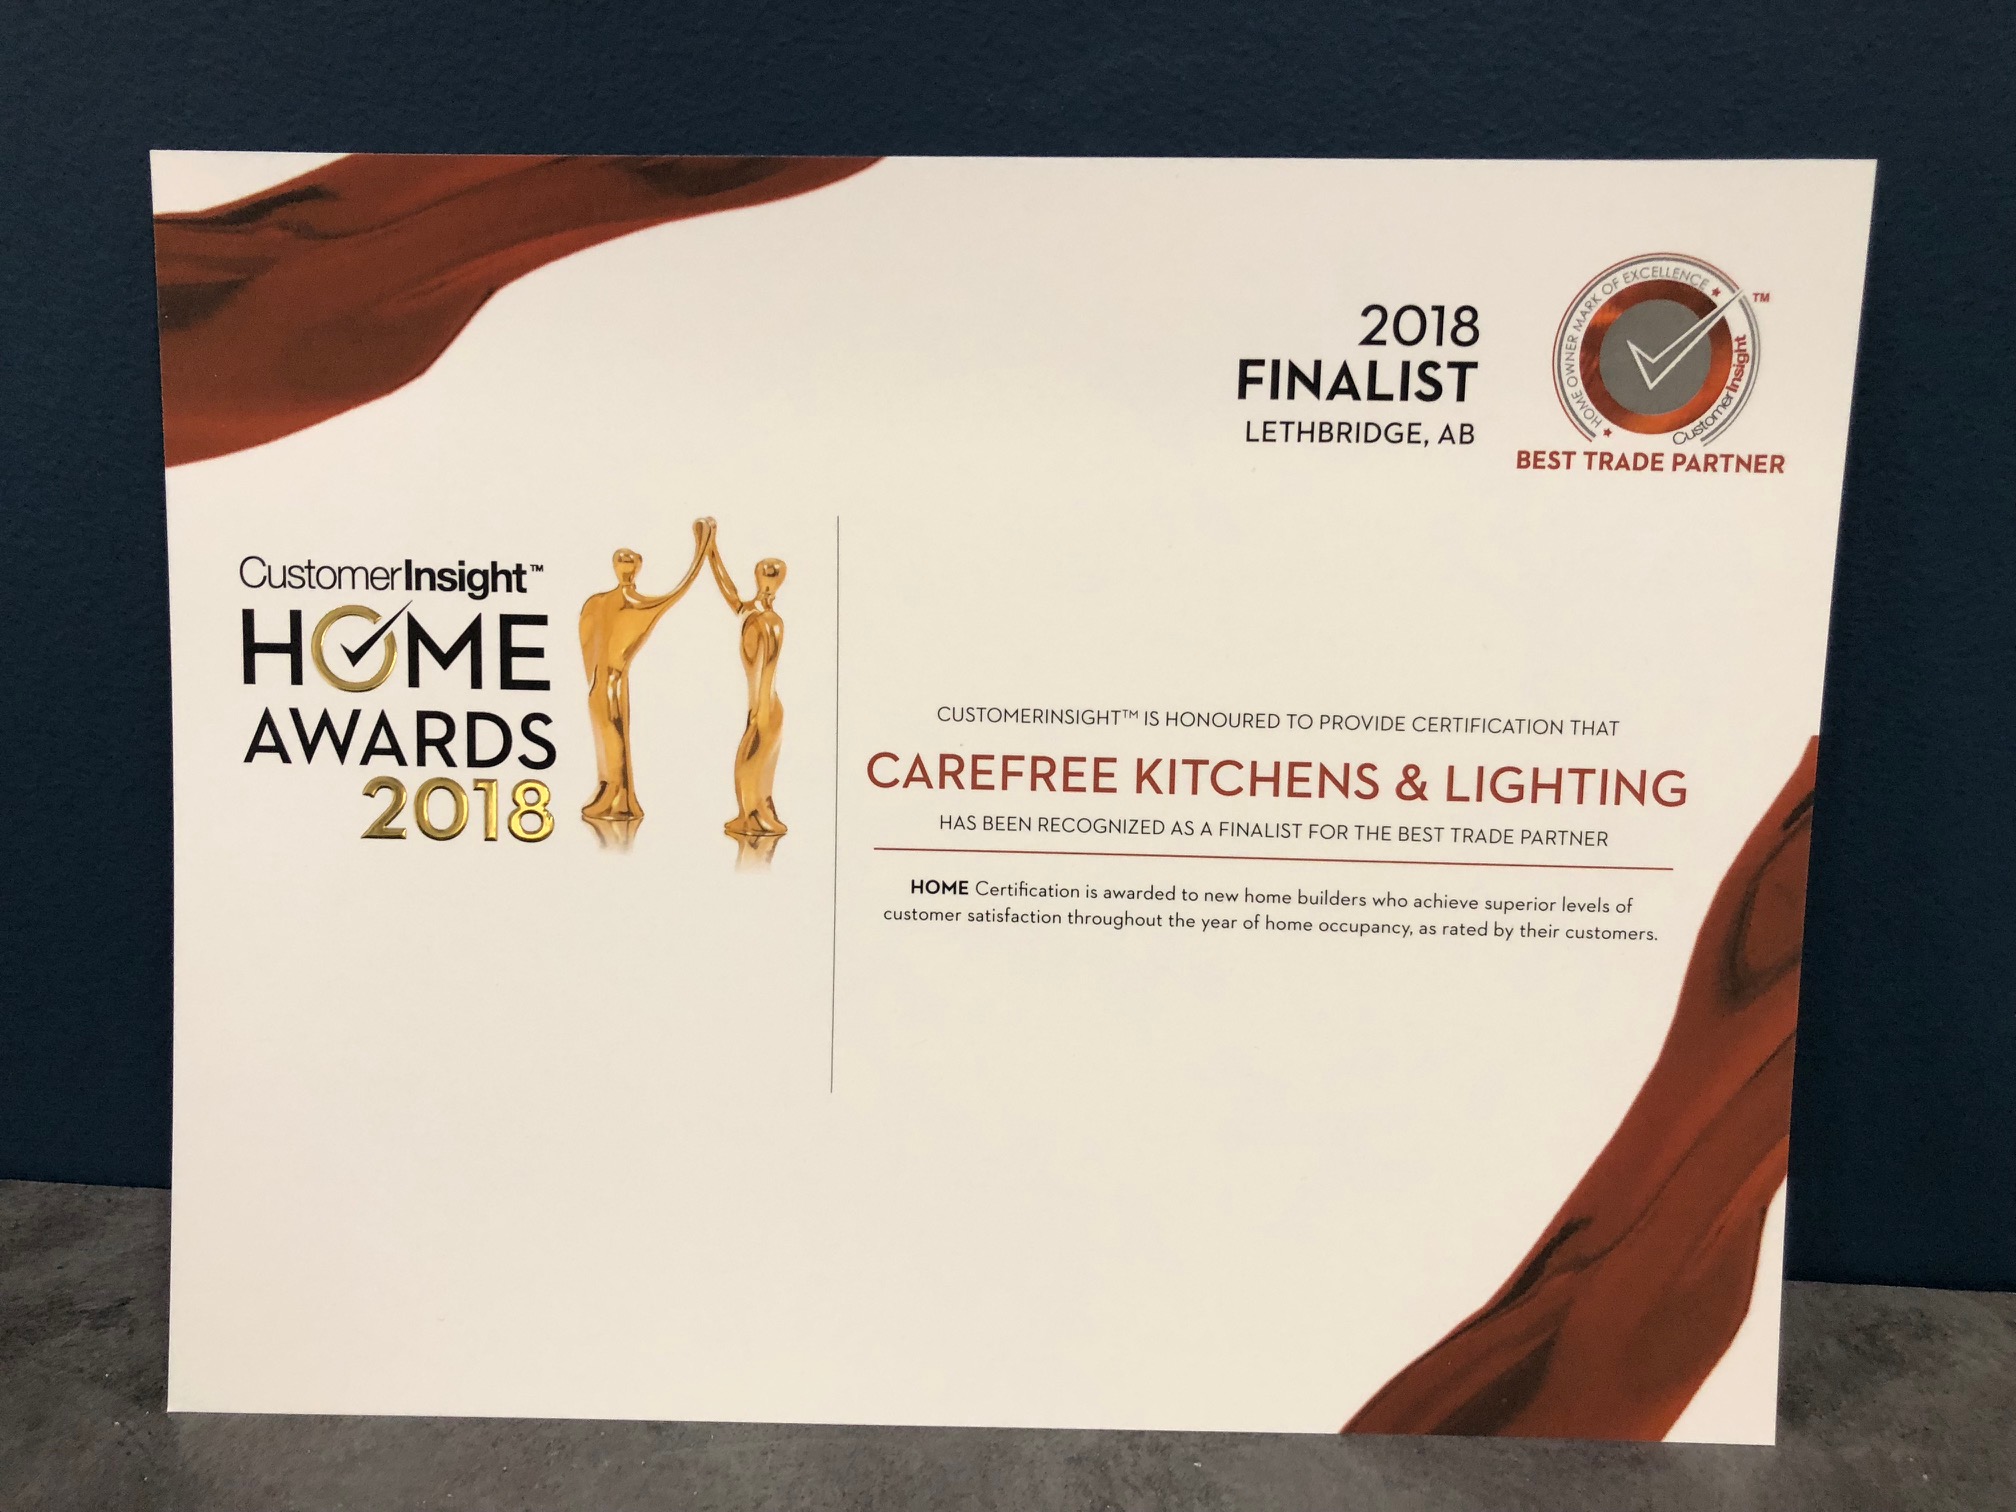 Customer Insights Home Awards 2018 - Carefree Kitchens & Lighting - Best Trade Partner